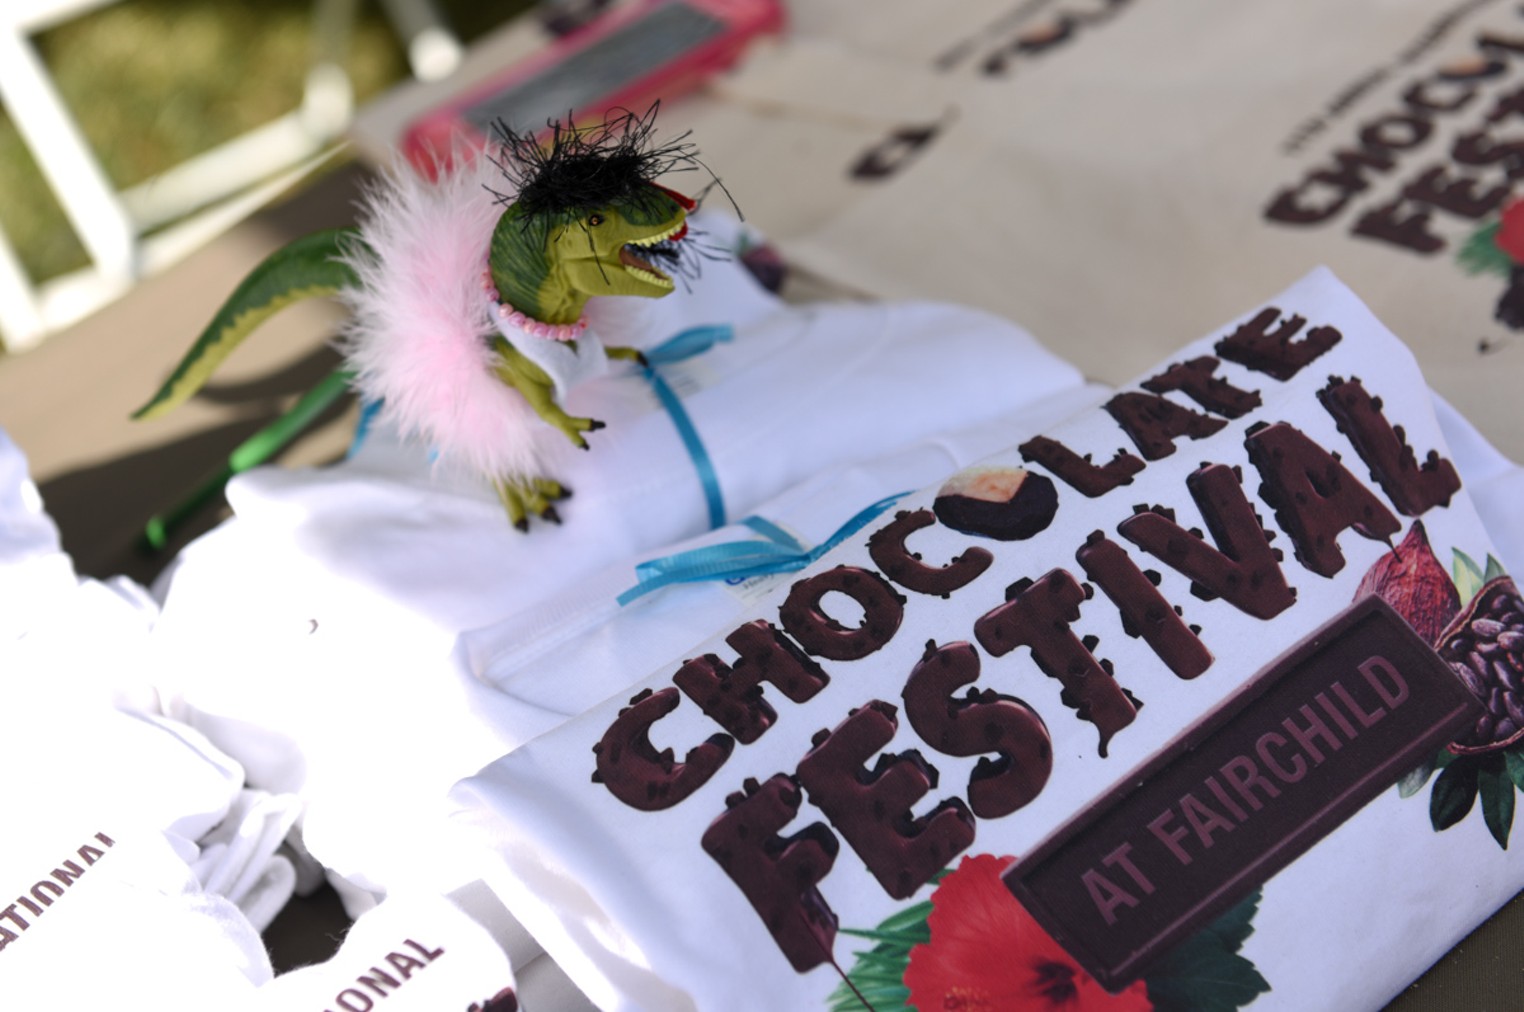 International Chocolate Festival at Fairchild Tropical Botanic Garden